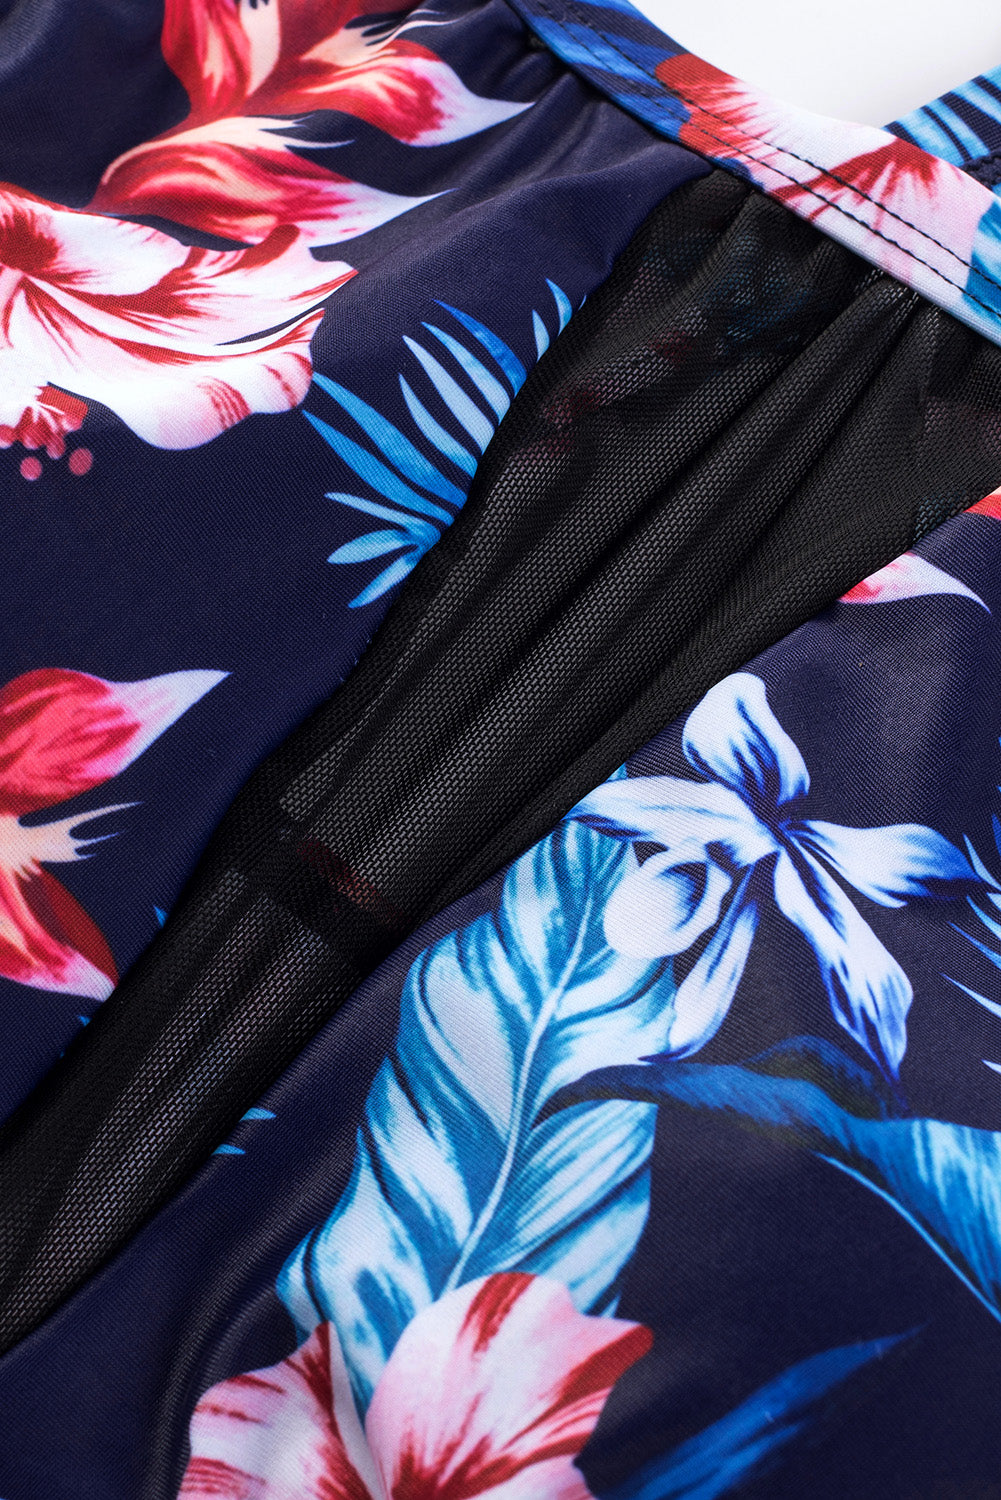 Black Floral Print Mesh Patchwork Criss Cross One-piece Swimsuit